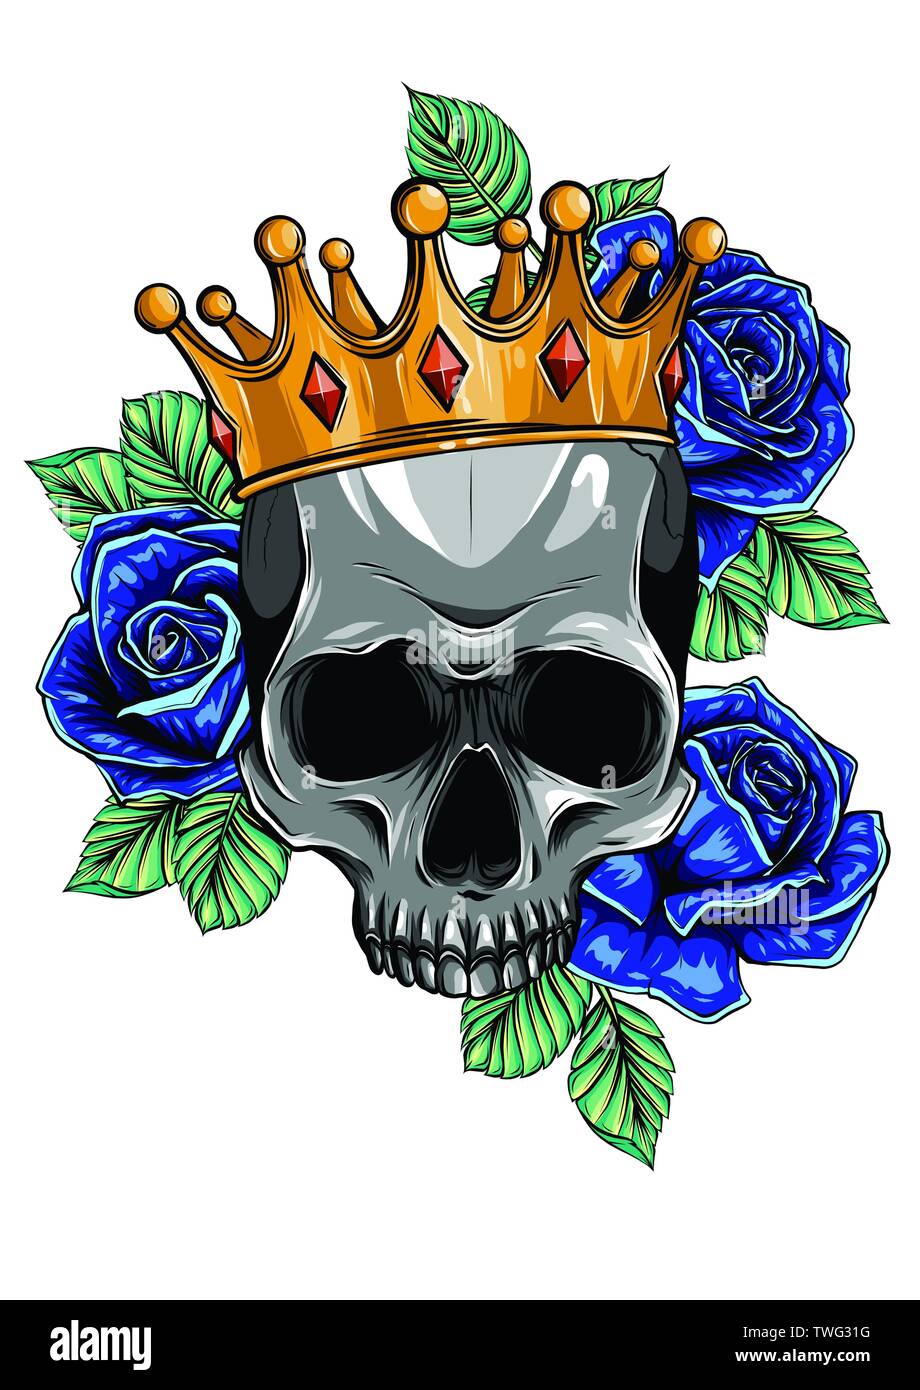 The Rat King – Skull & Crown Inc